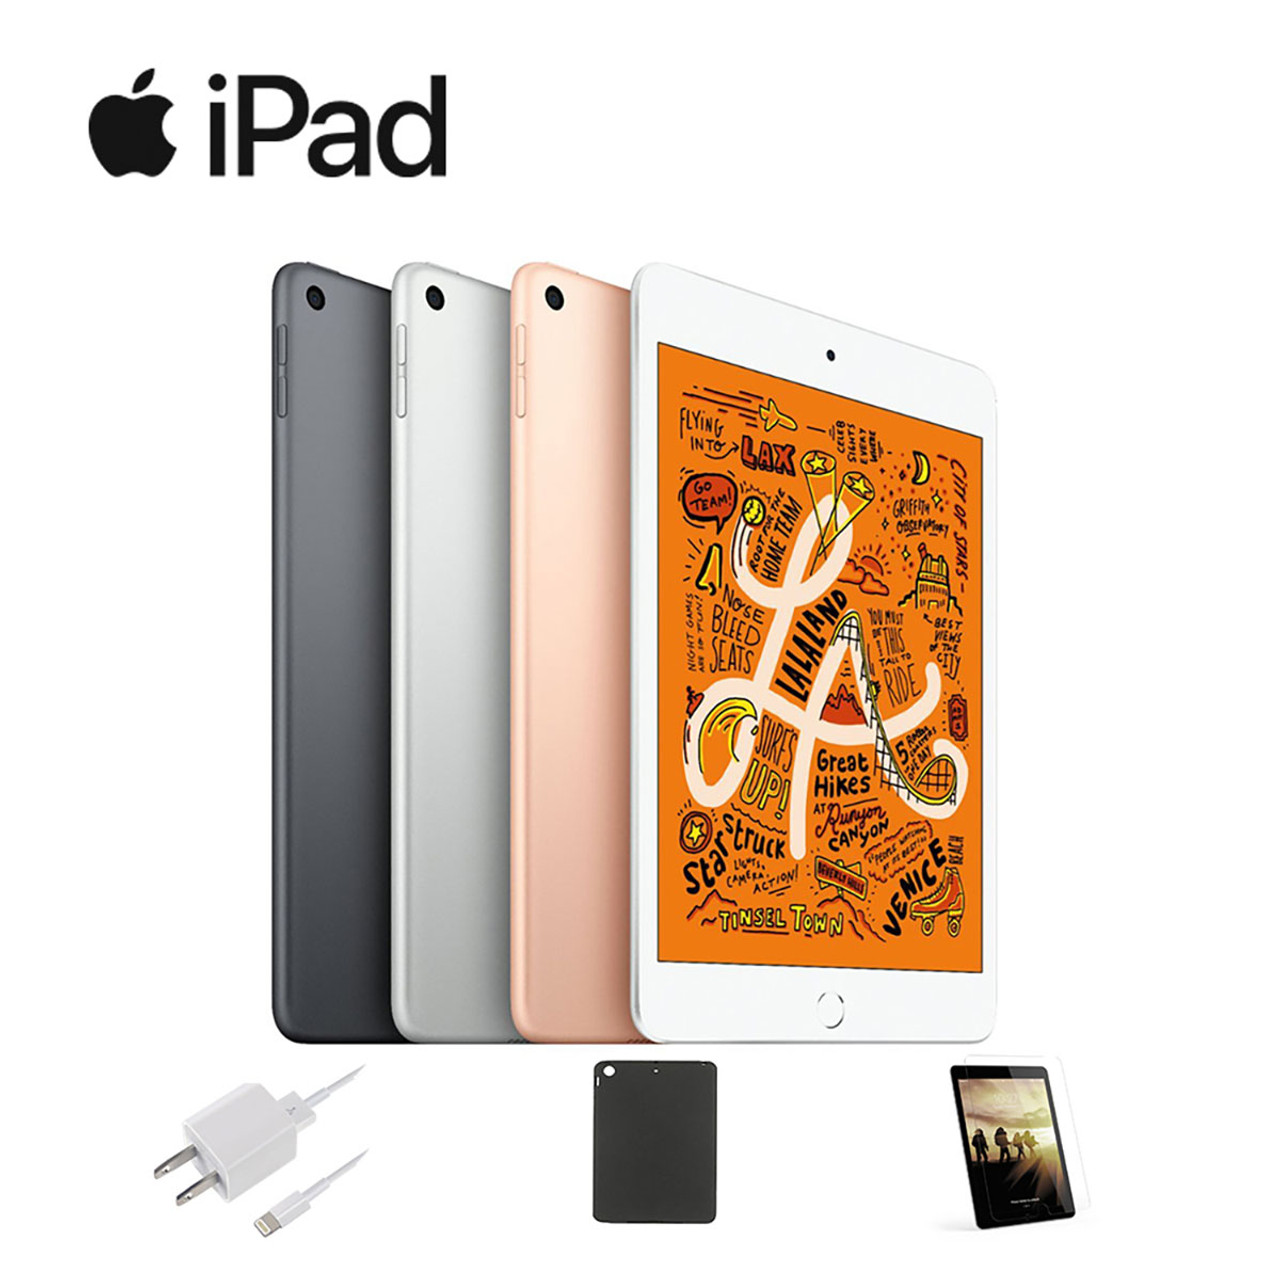 iPad Mini 5th Gen 256GB, WiFi + Cellular Bundle